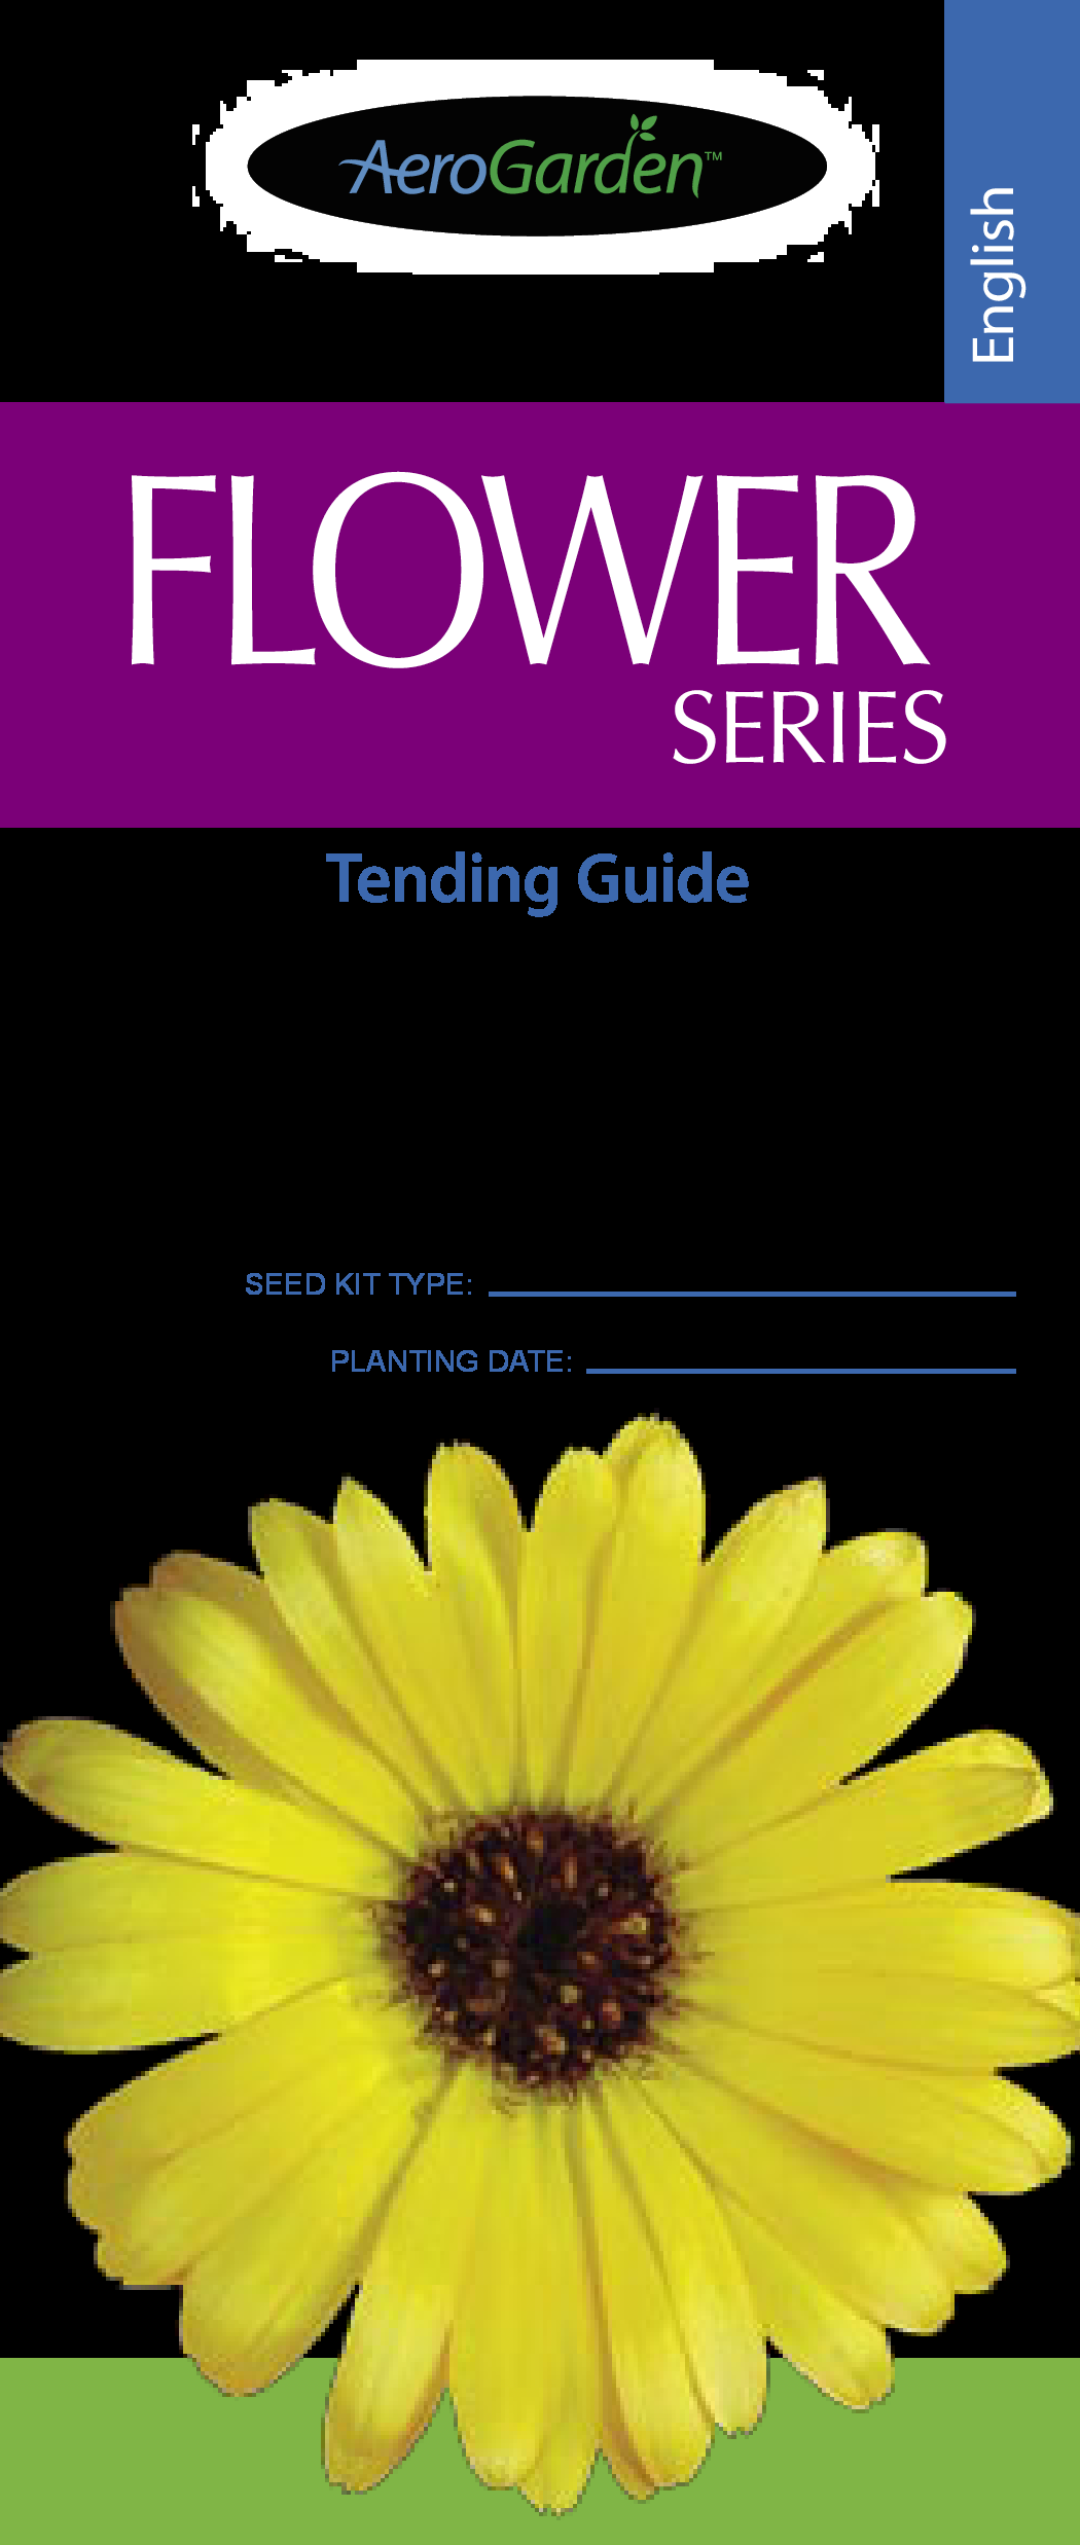 AeroGarden Flower Series manual Tending Guide, English, Seed Kit Type Planting Date 